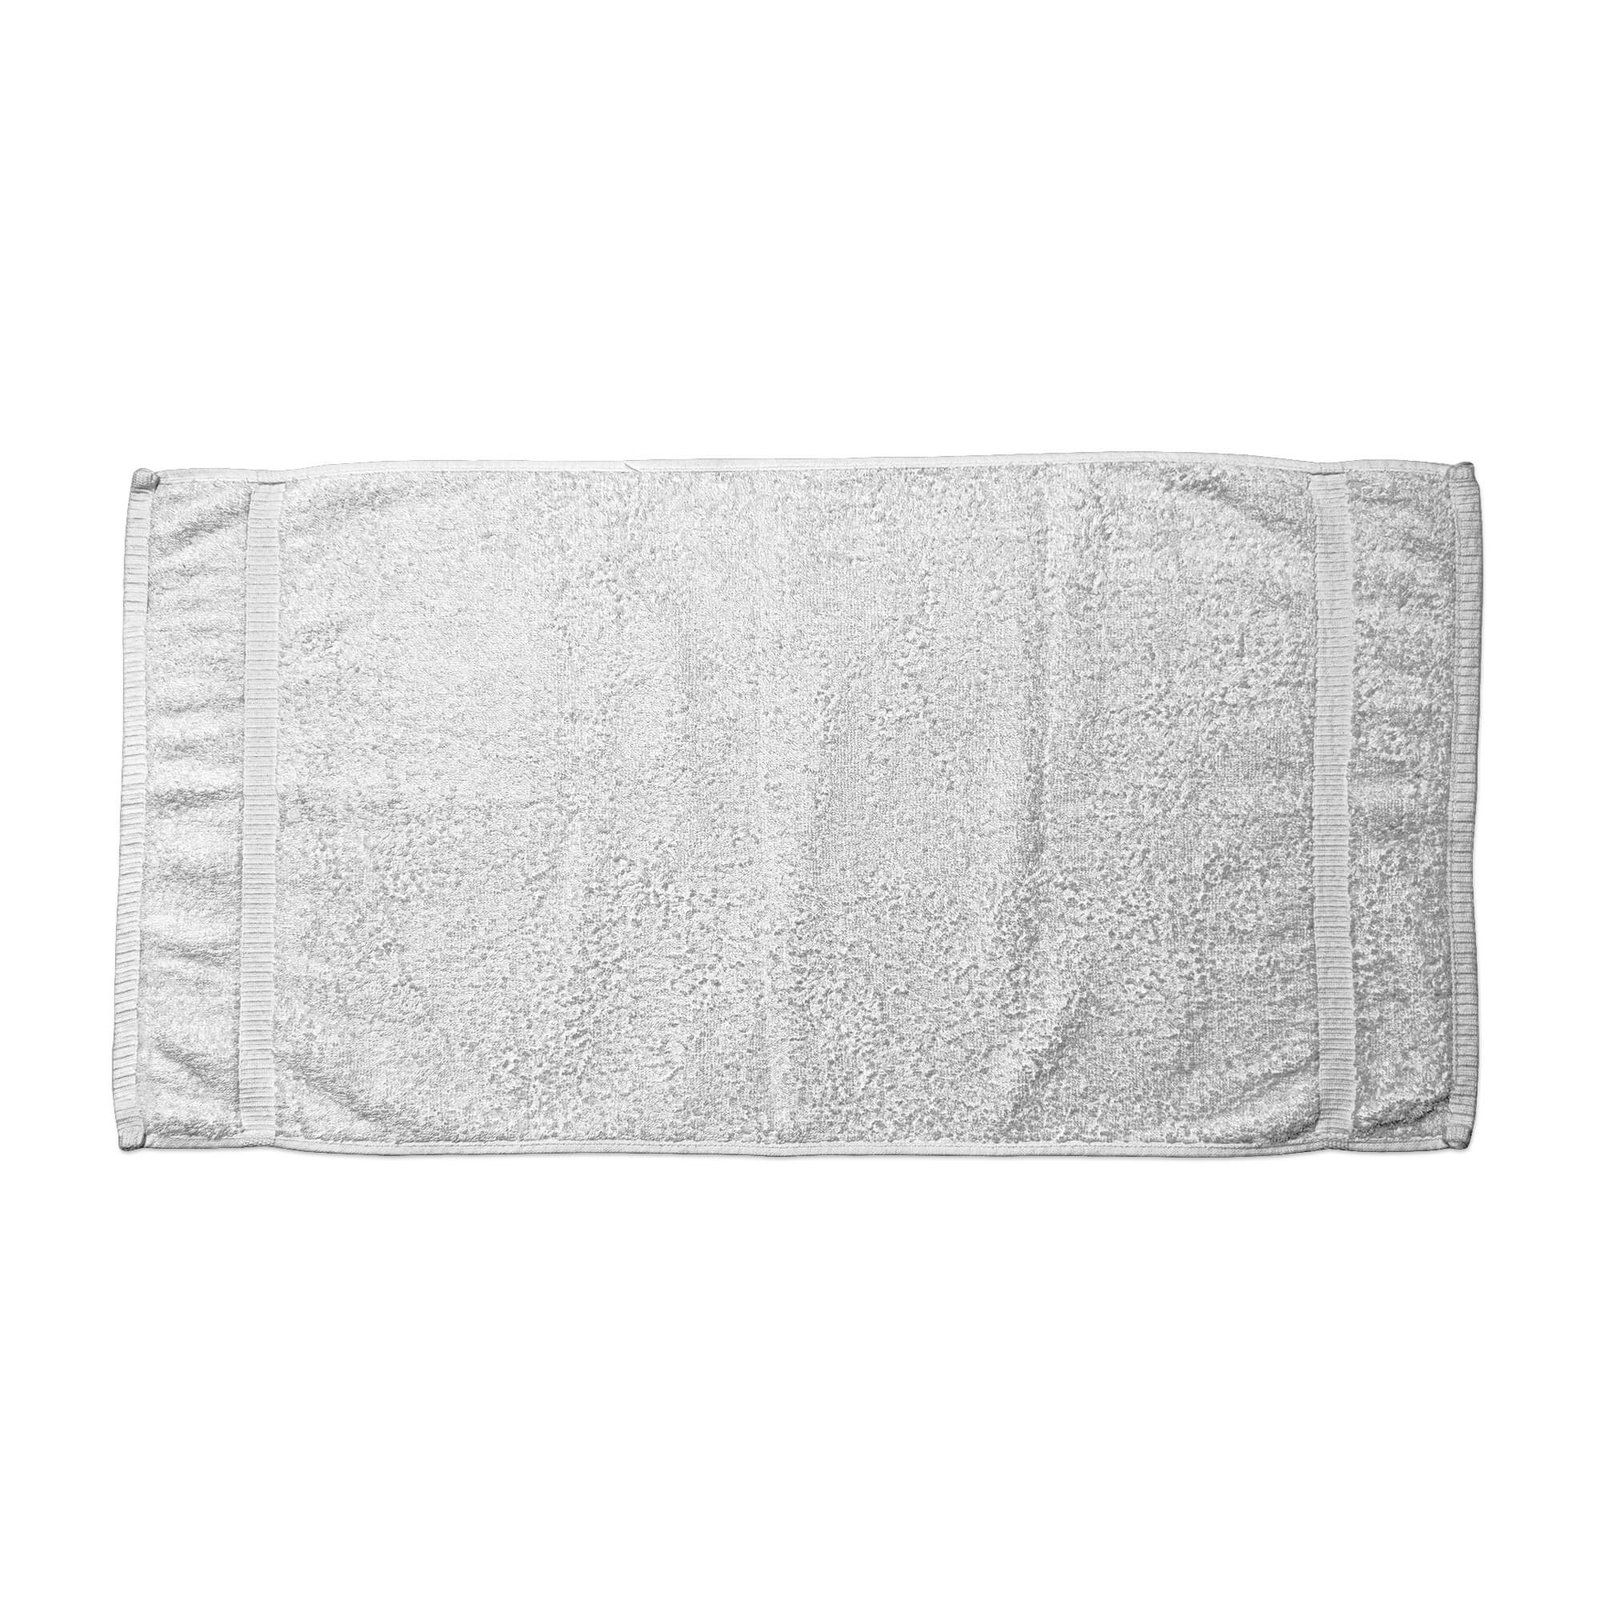 Blank White Towel Mockup Free PSD Template